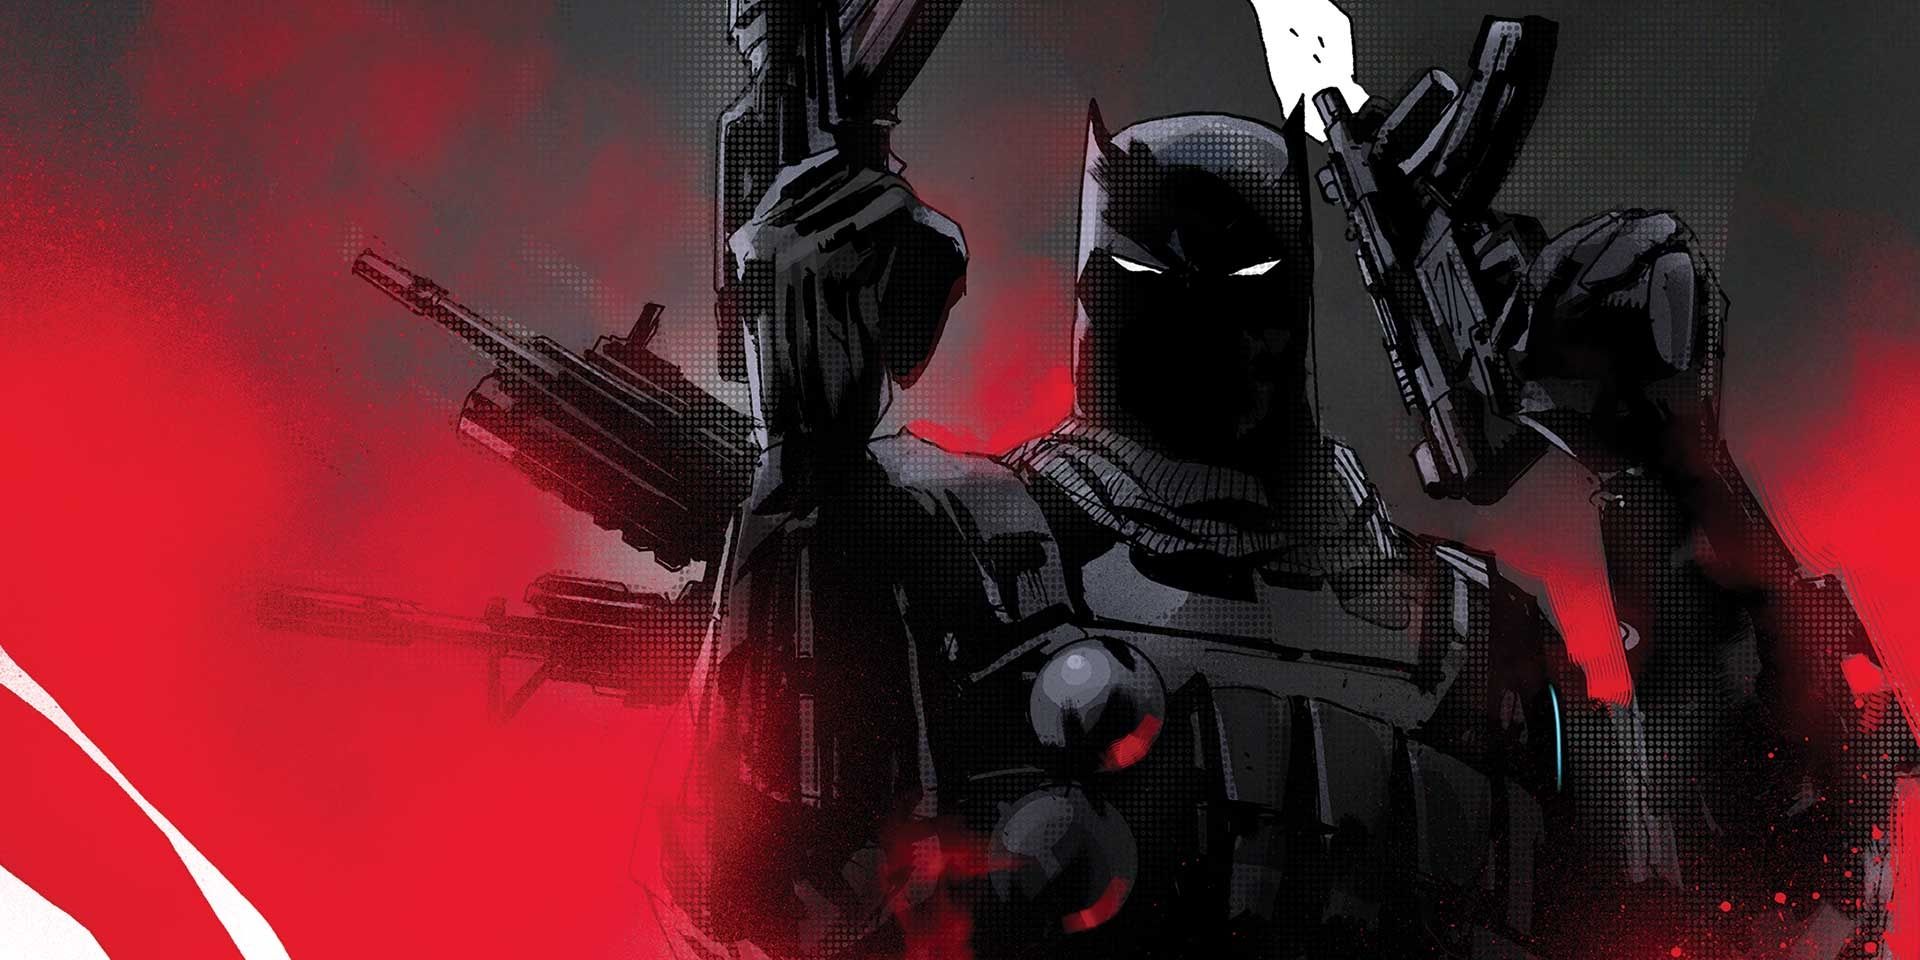 The Grim Knight From The Batman Comics